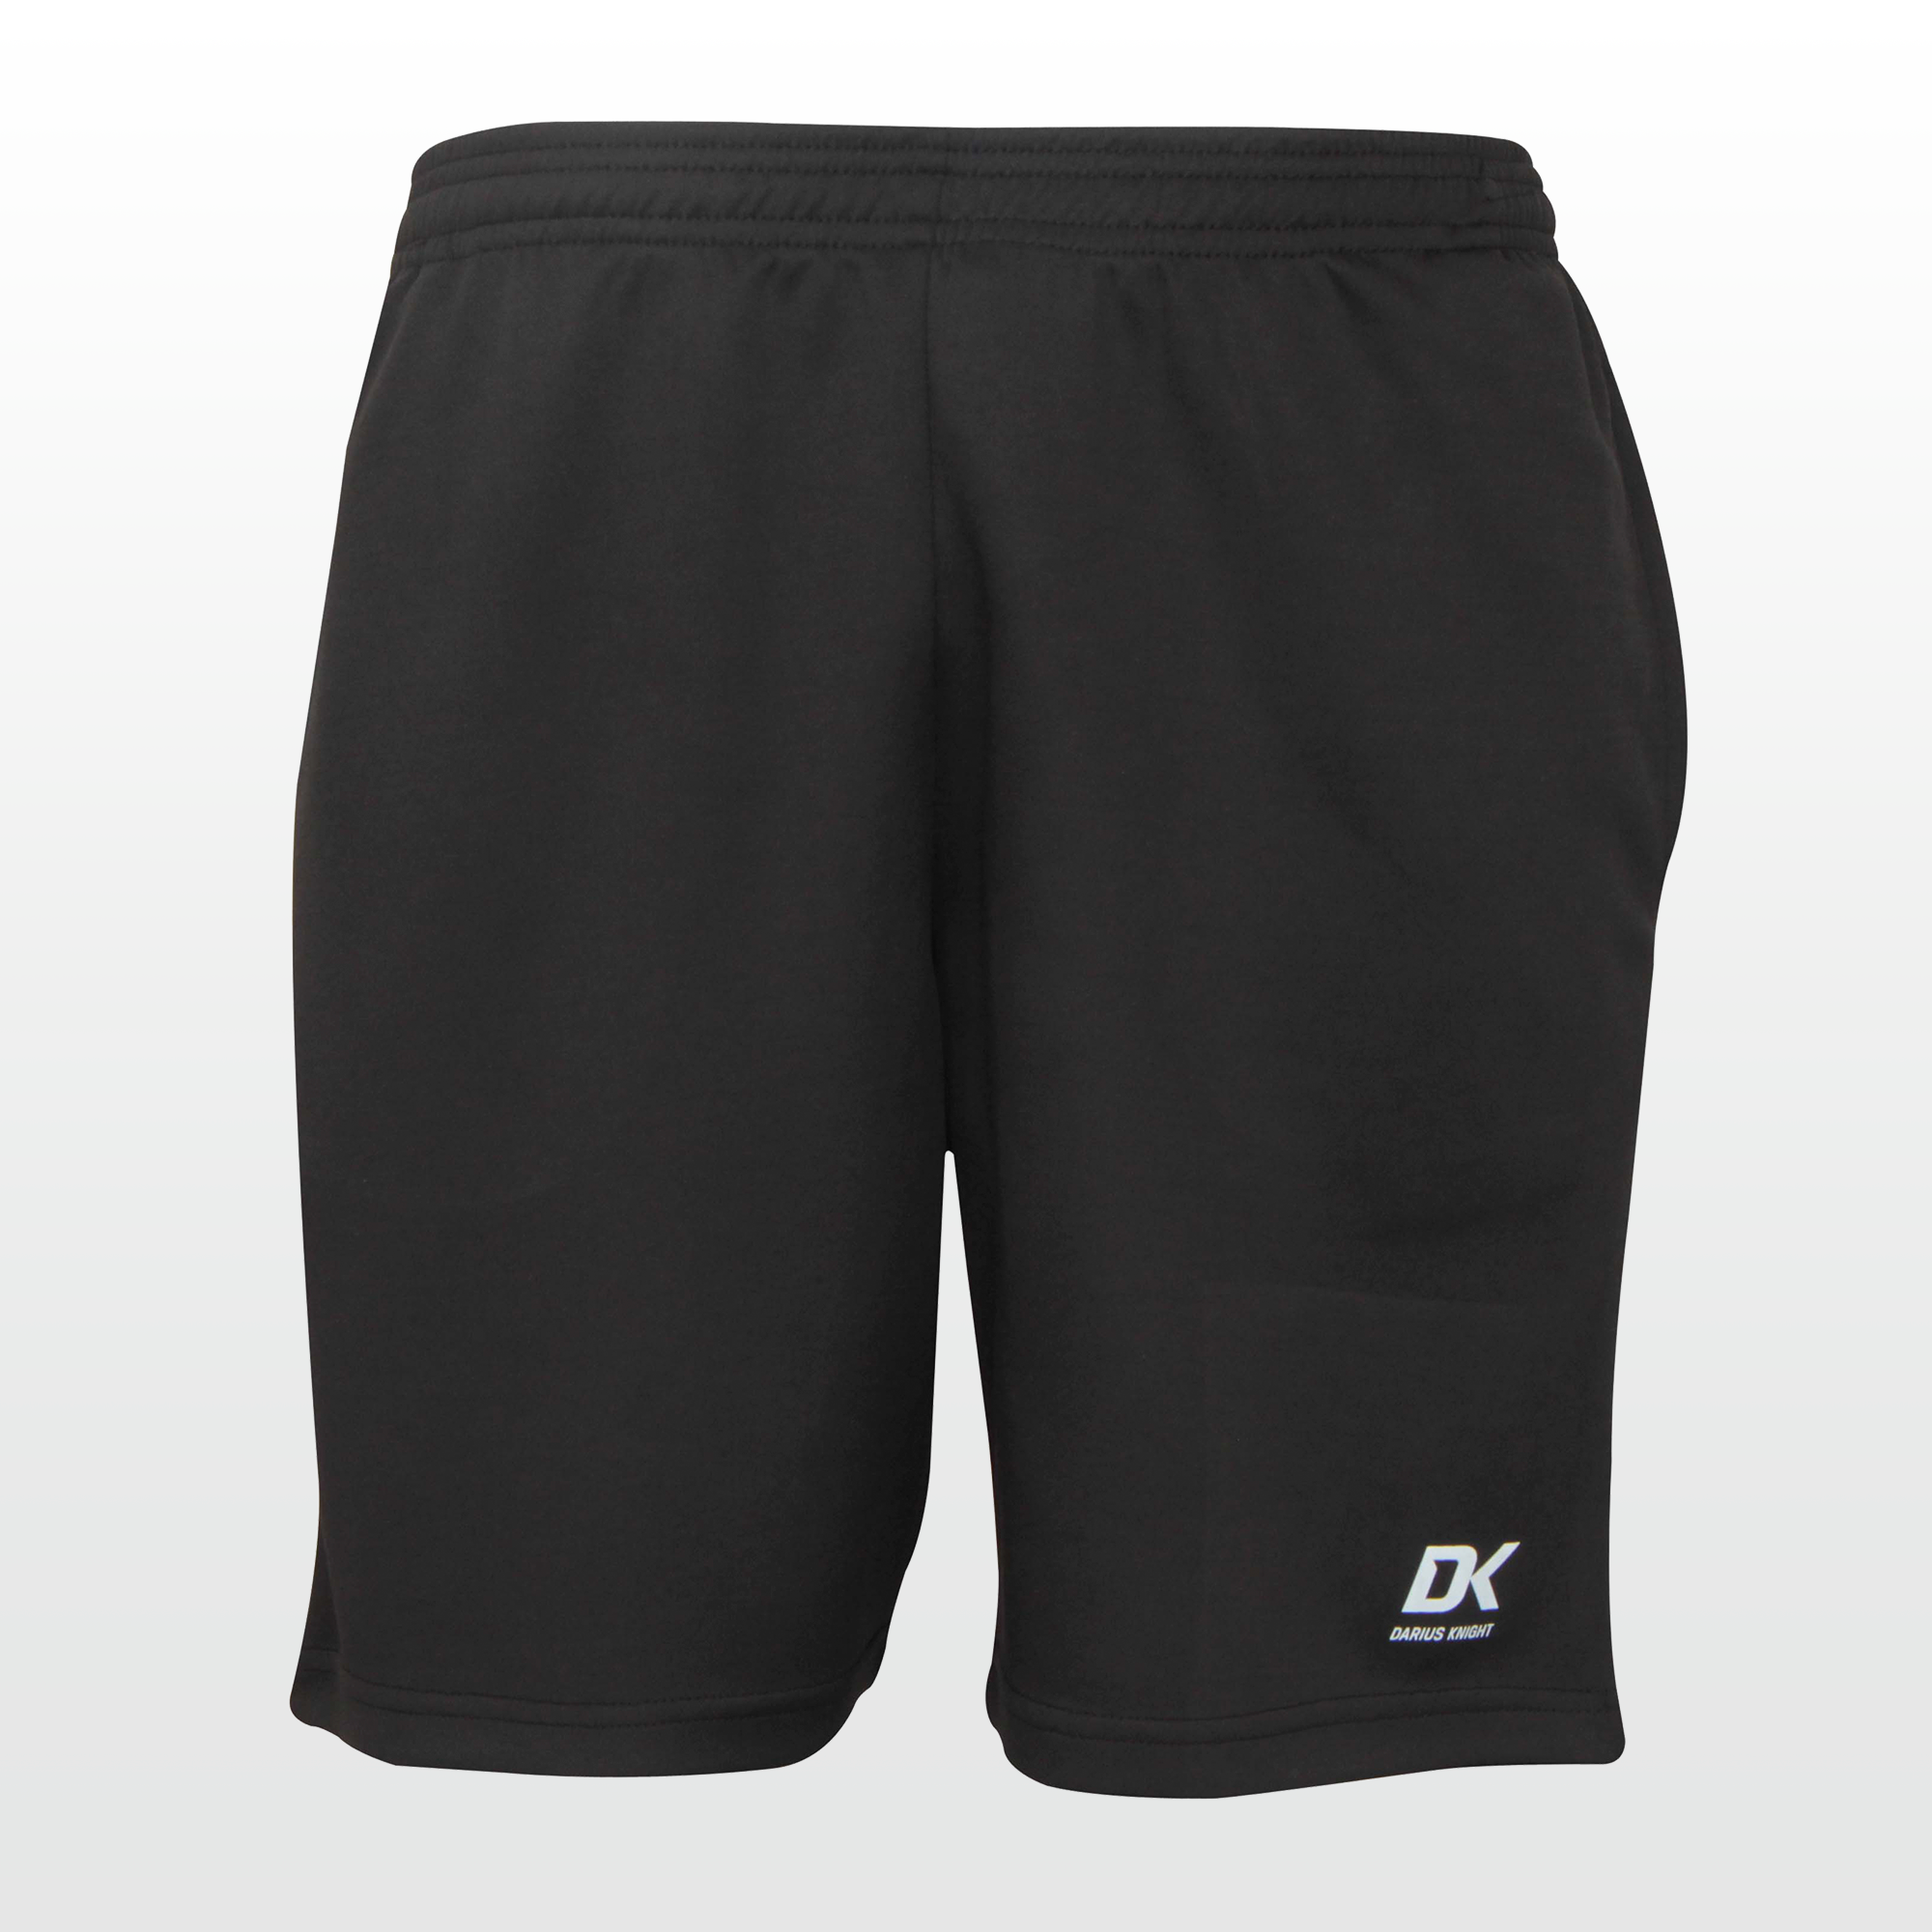 DK Sports Shorts (Black) - DK Sports